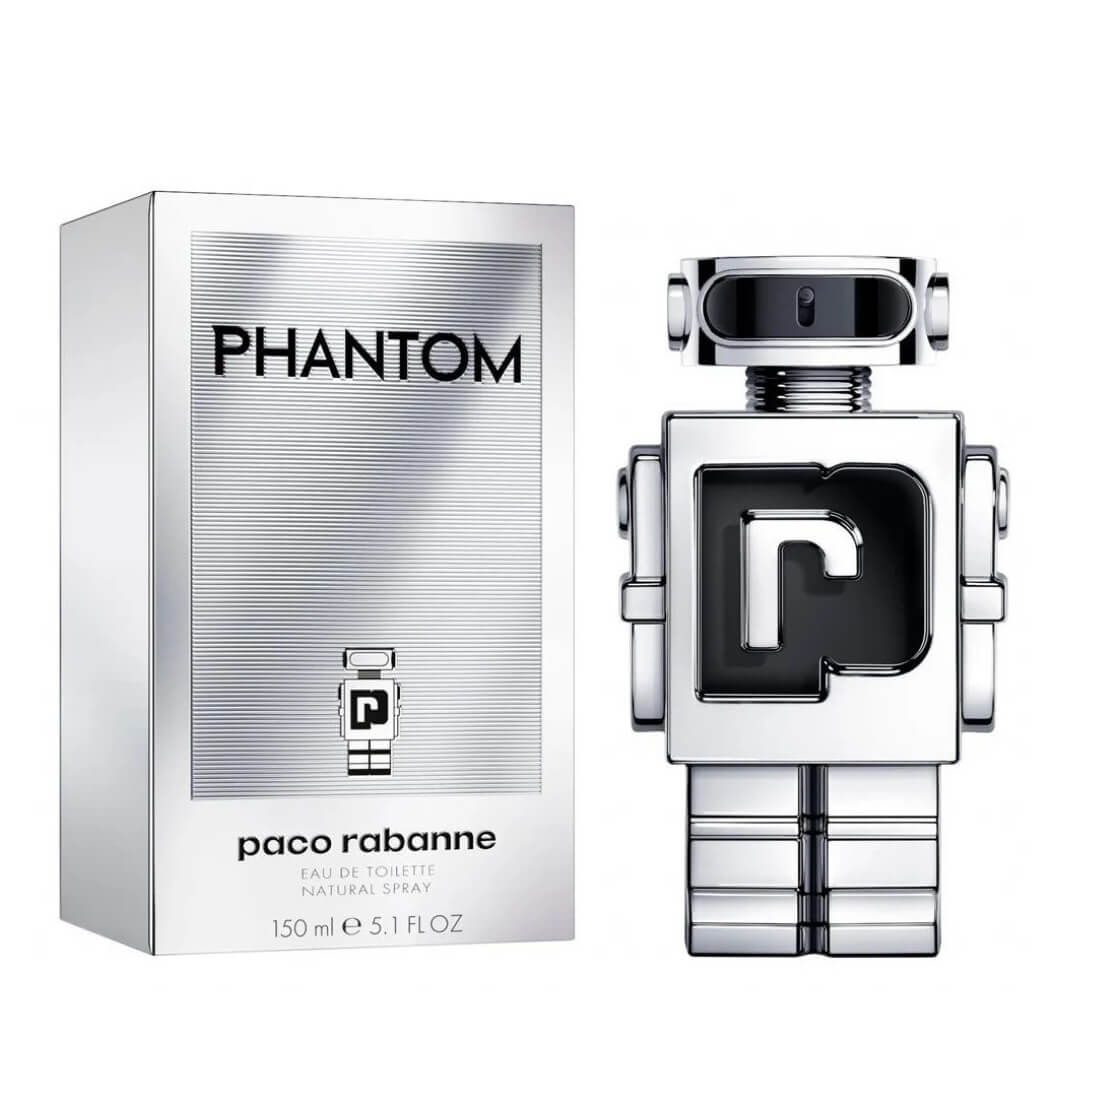 paco rabanne phantom perfume